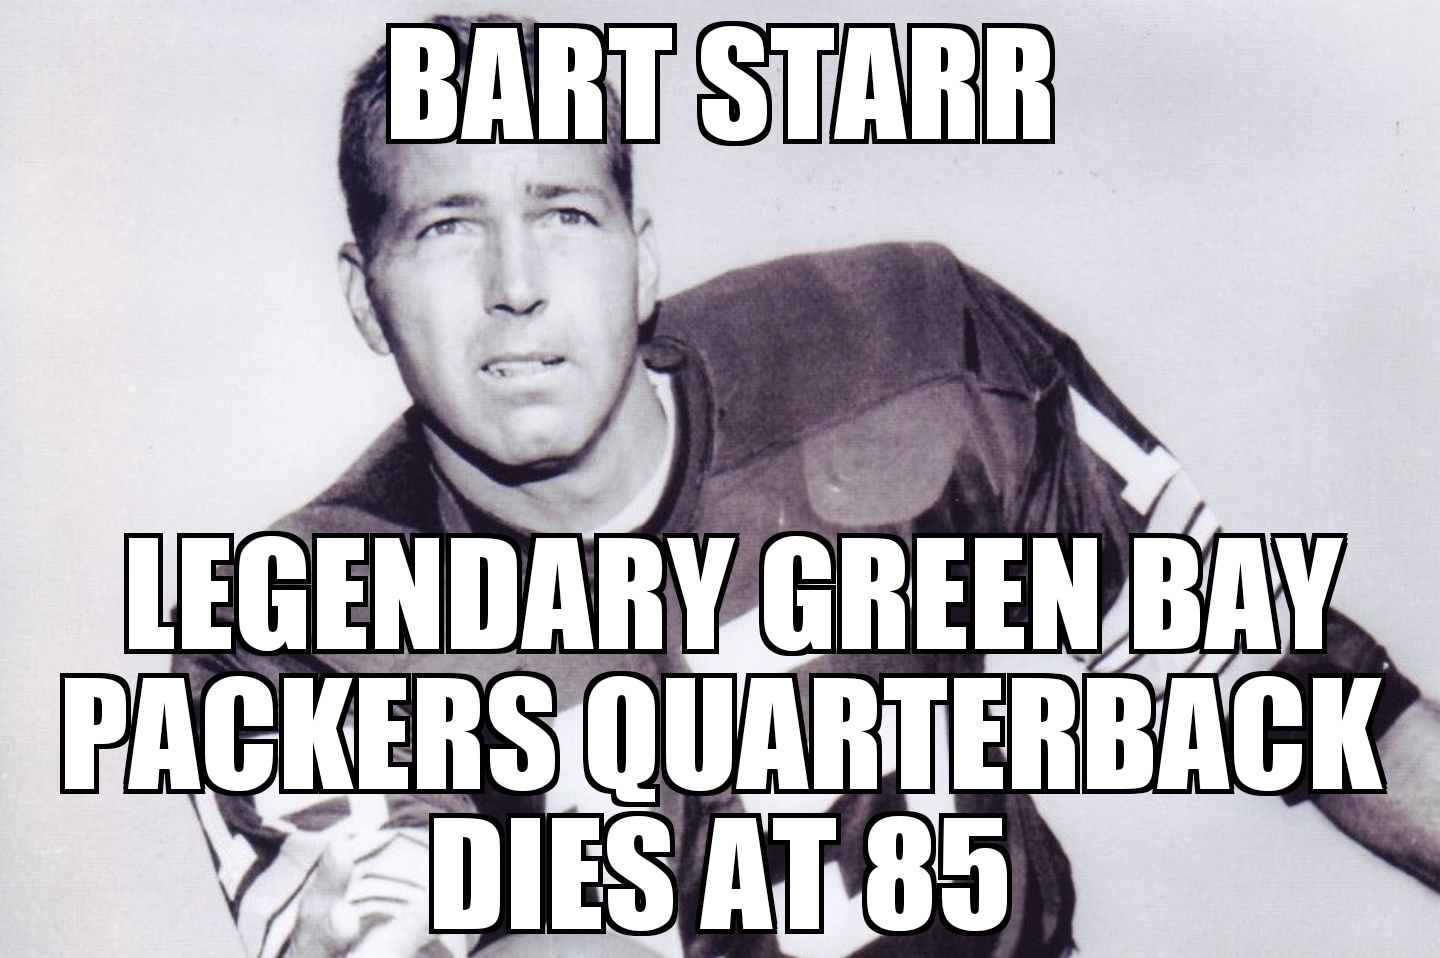 Packers quarterback Bart Starr dies at 85